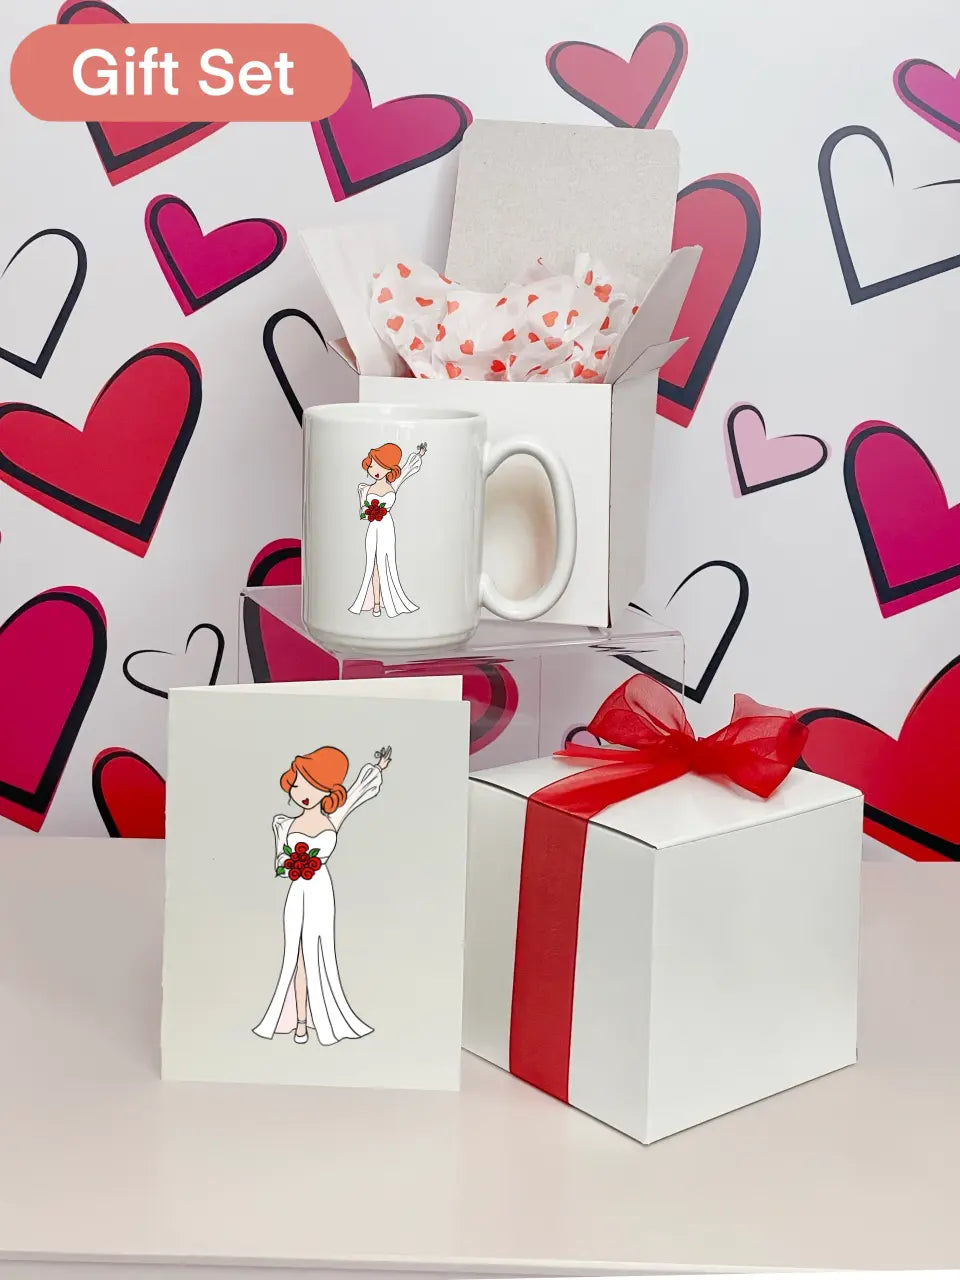 Ceramic Mug - Bridal, Bride